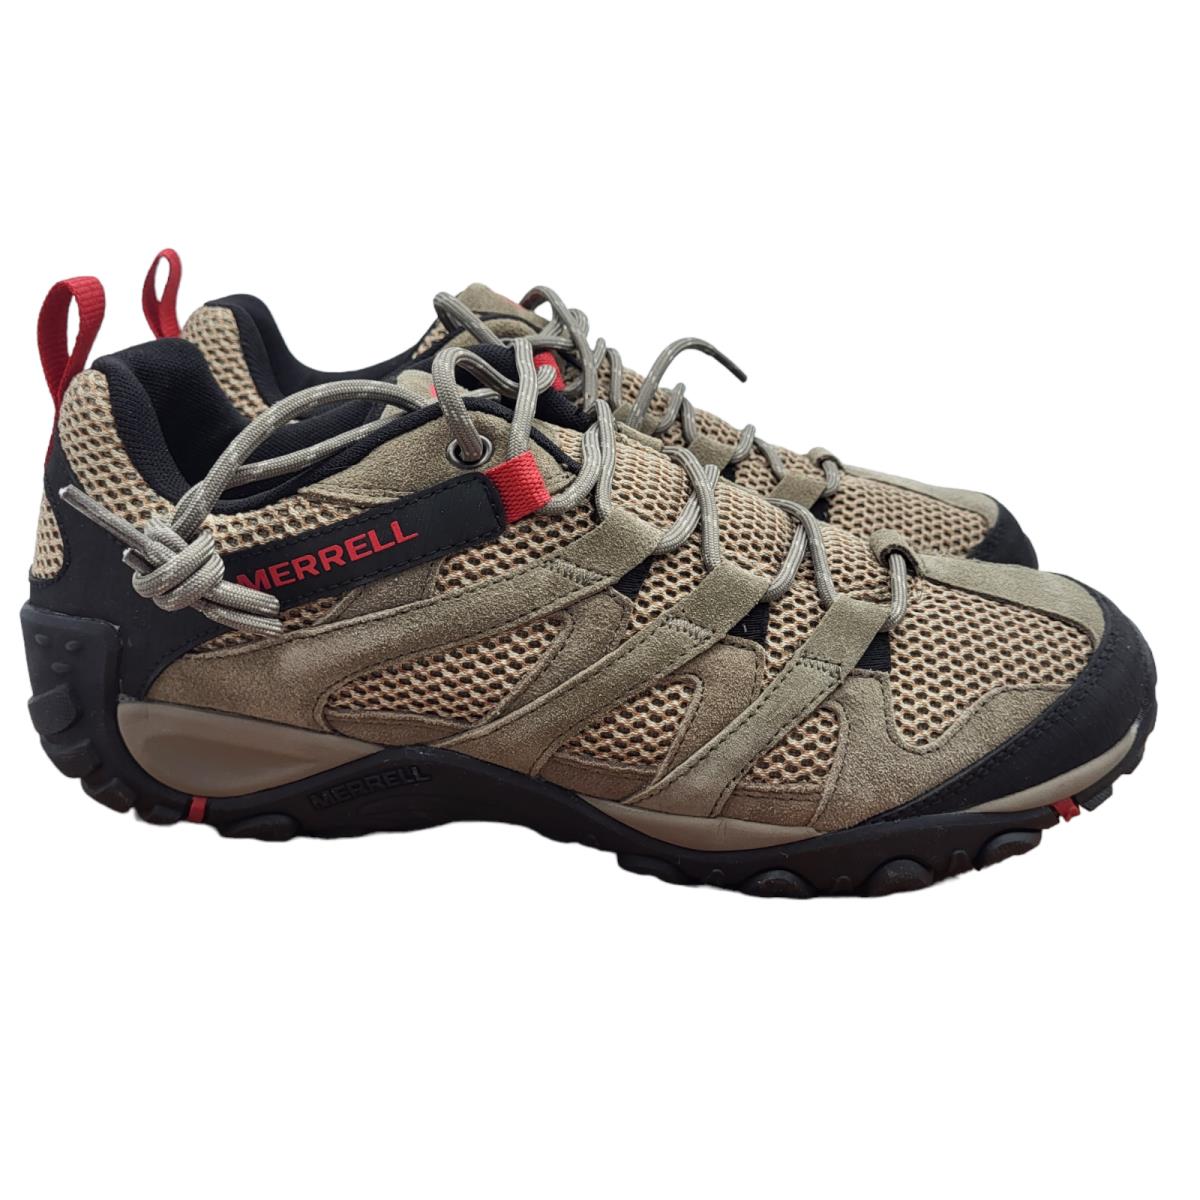 Merrell Alverstone Hiking Boots Mens Mid Boulder Waterproof J033027 Shoes